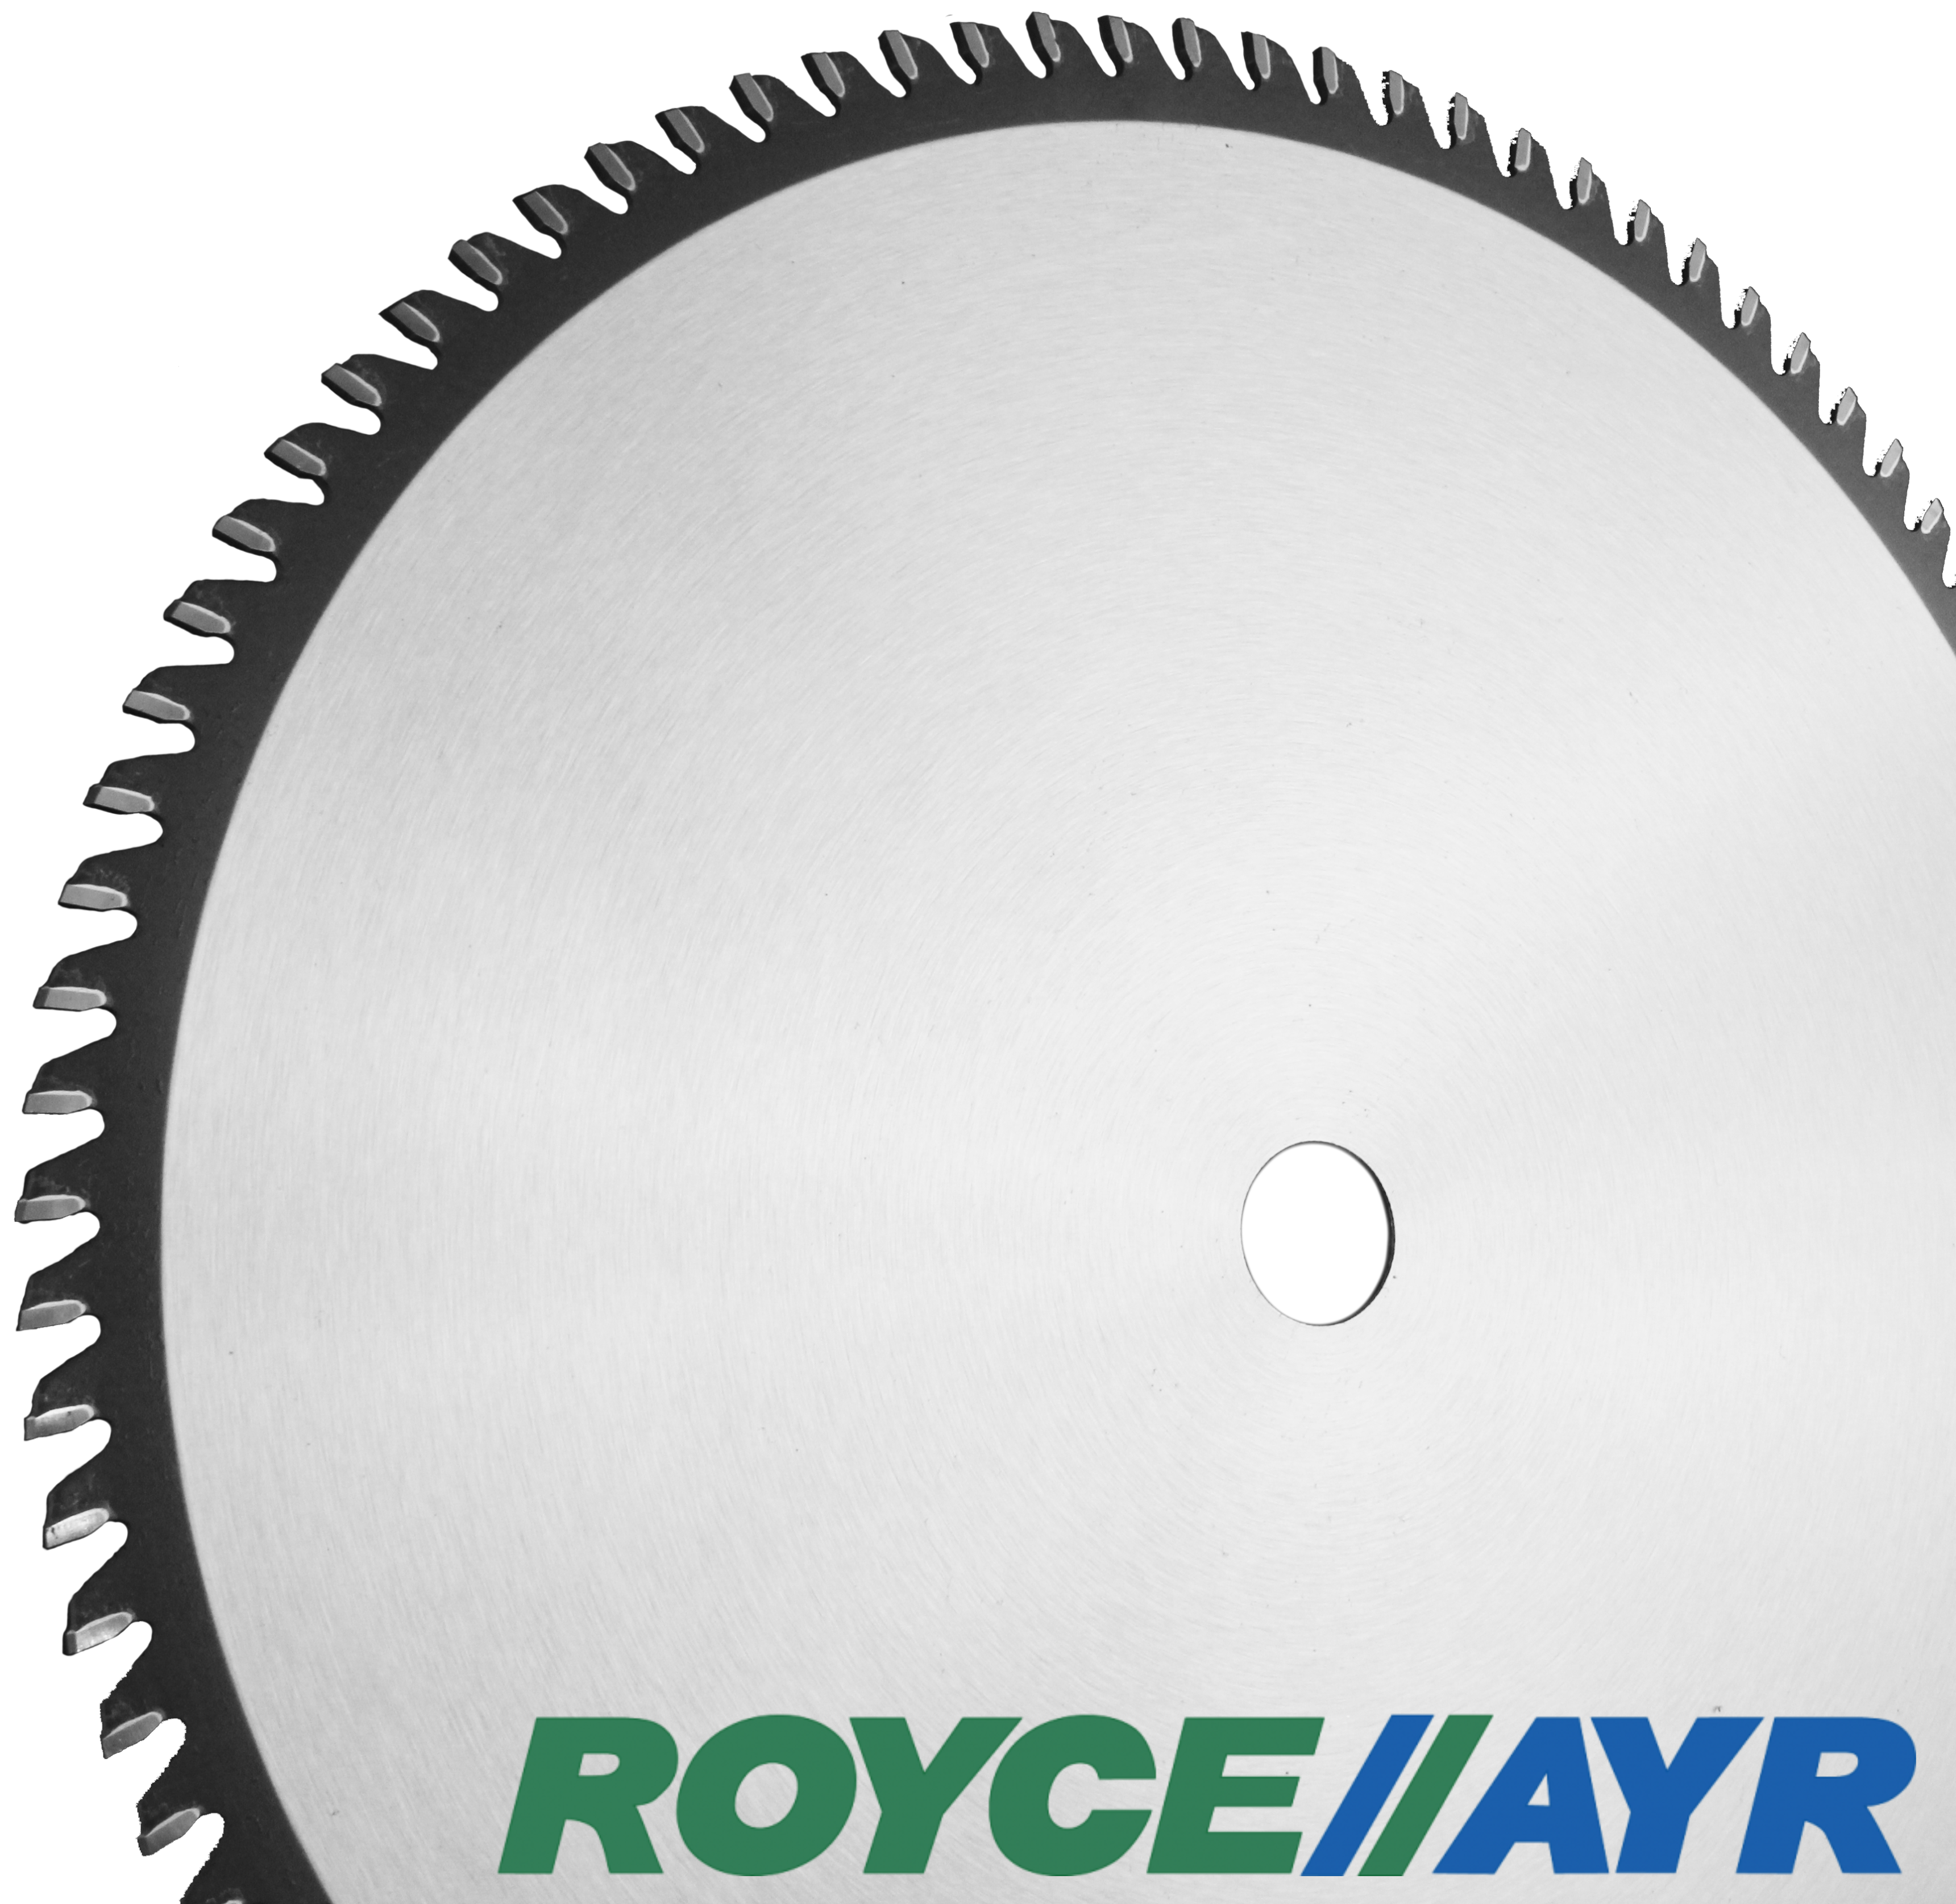 Royce//Ayr - S29 Steel | Product